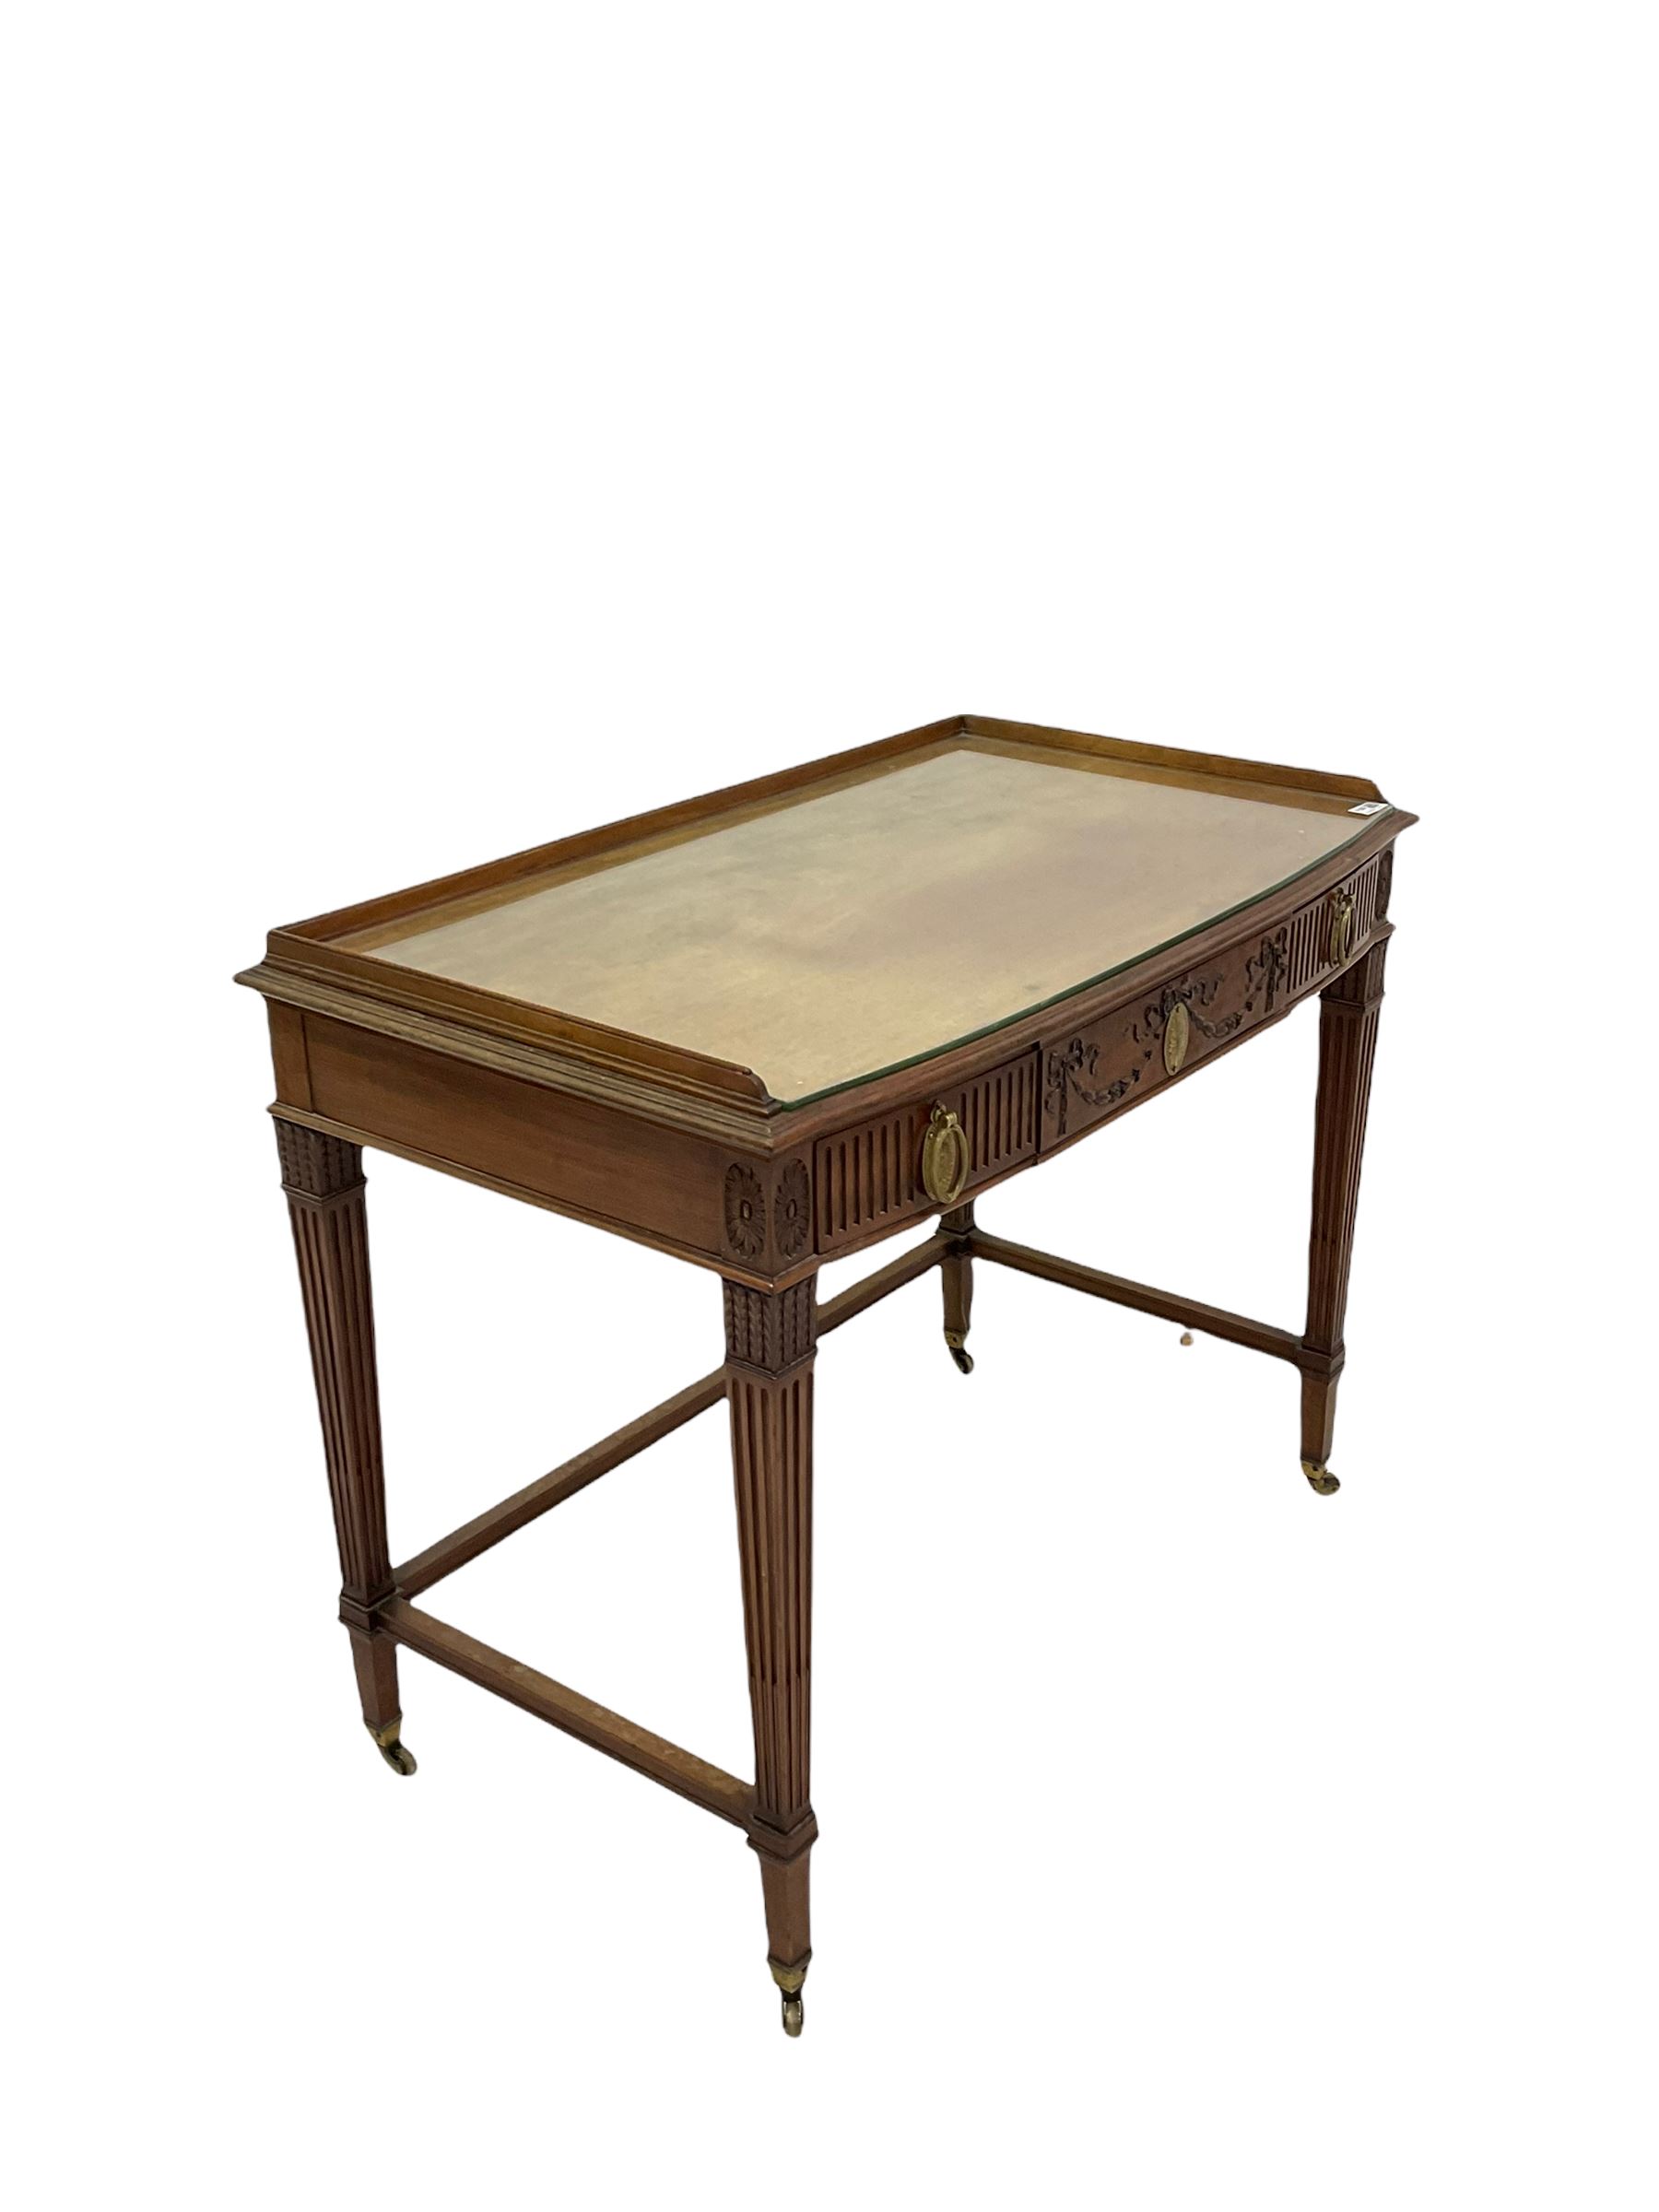 Morison & Co of Edinburgh - Mahogany writing table - Image 2 of 4